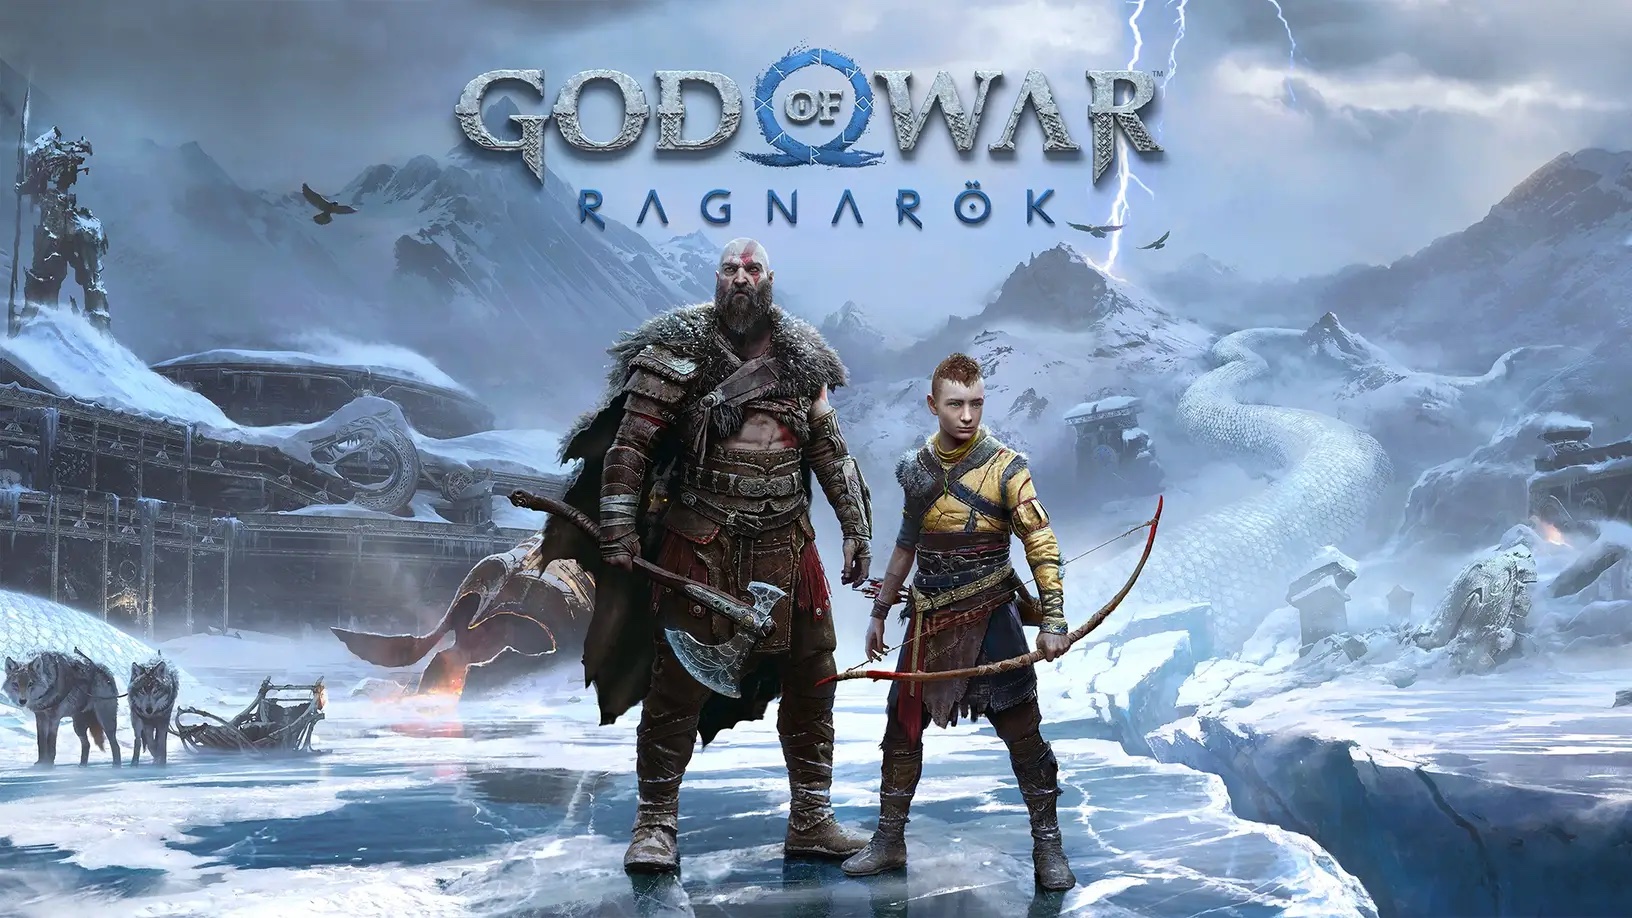 Bafta Game Awards 2023 winners: Vampire Survivor shock best game, God of  War: Ragnarok wins six